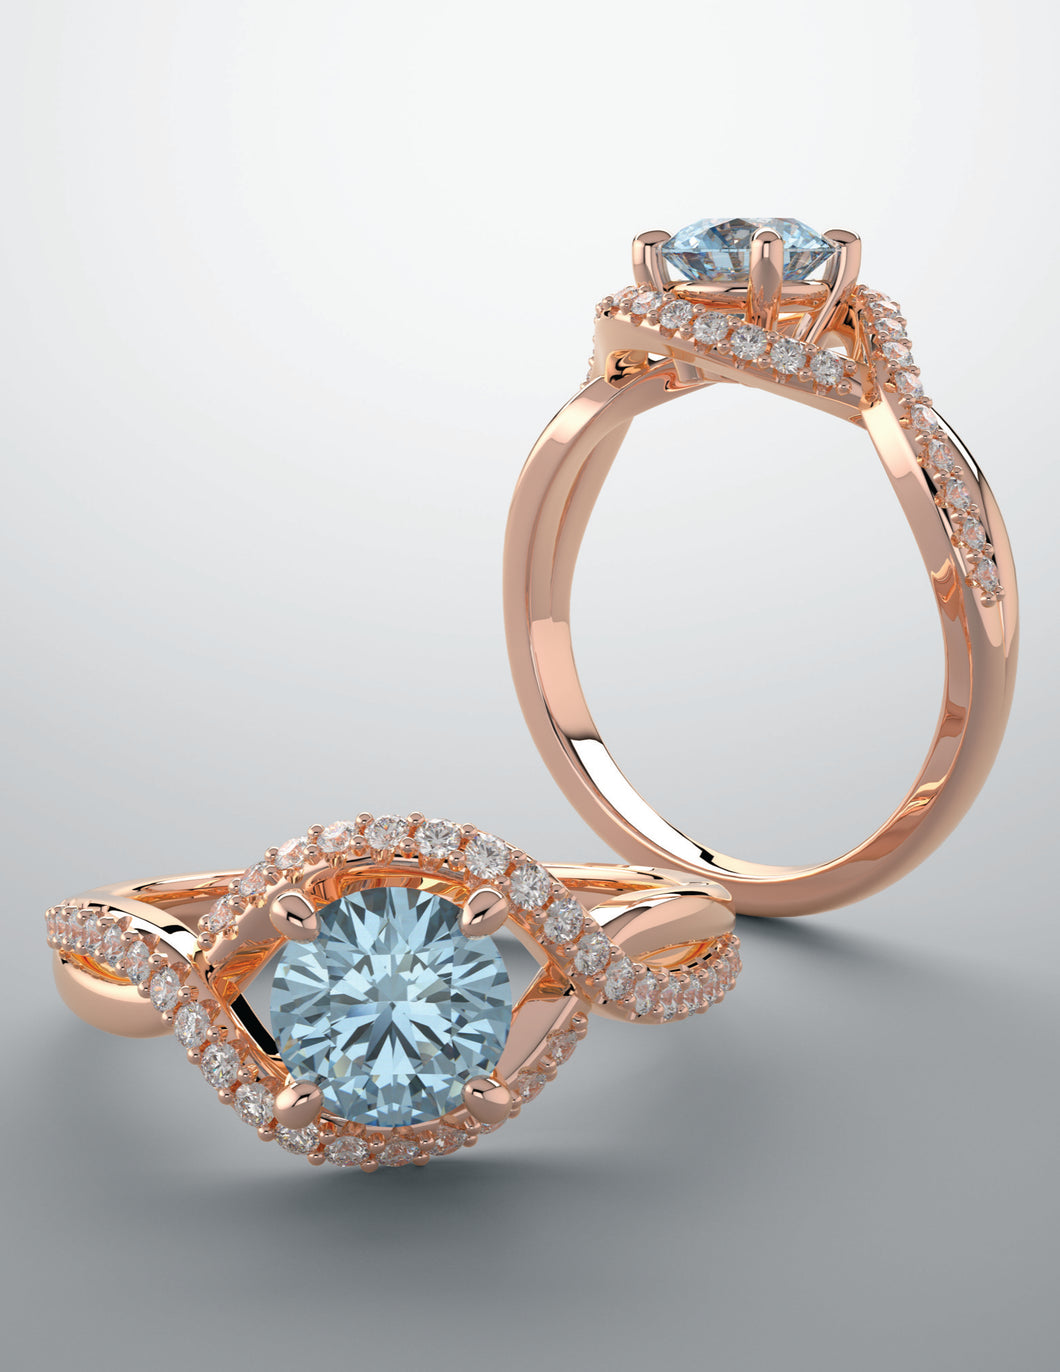 Color gem ring blue zircon and rose gold